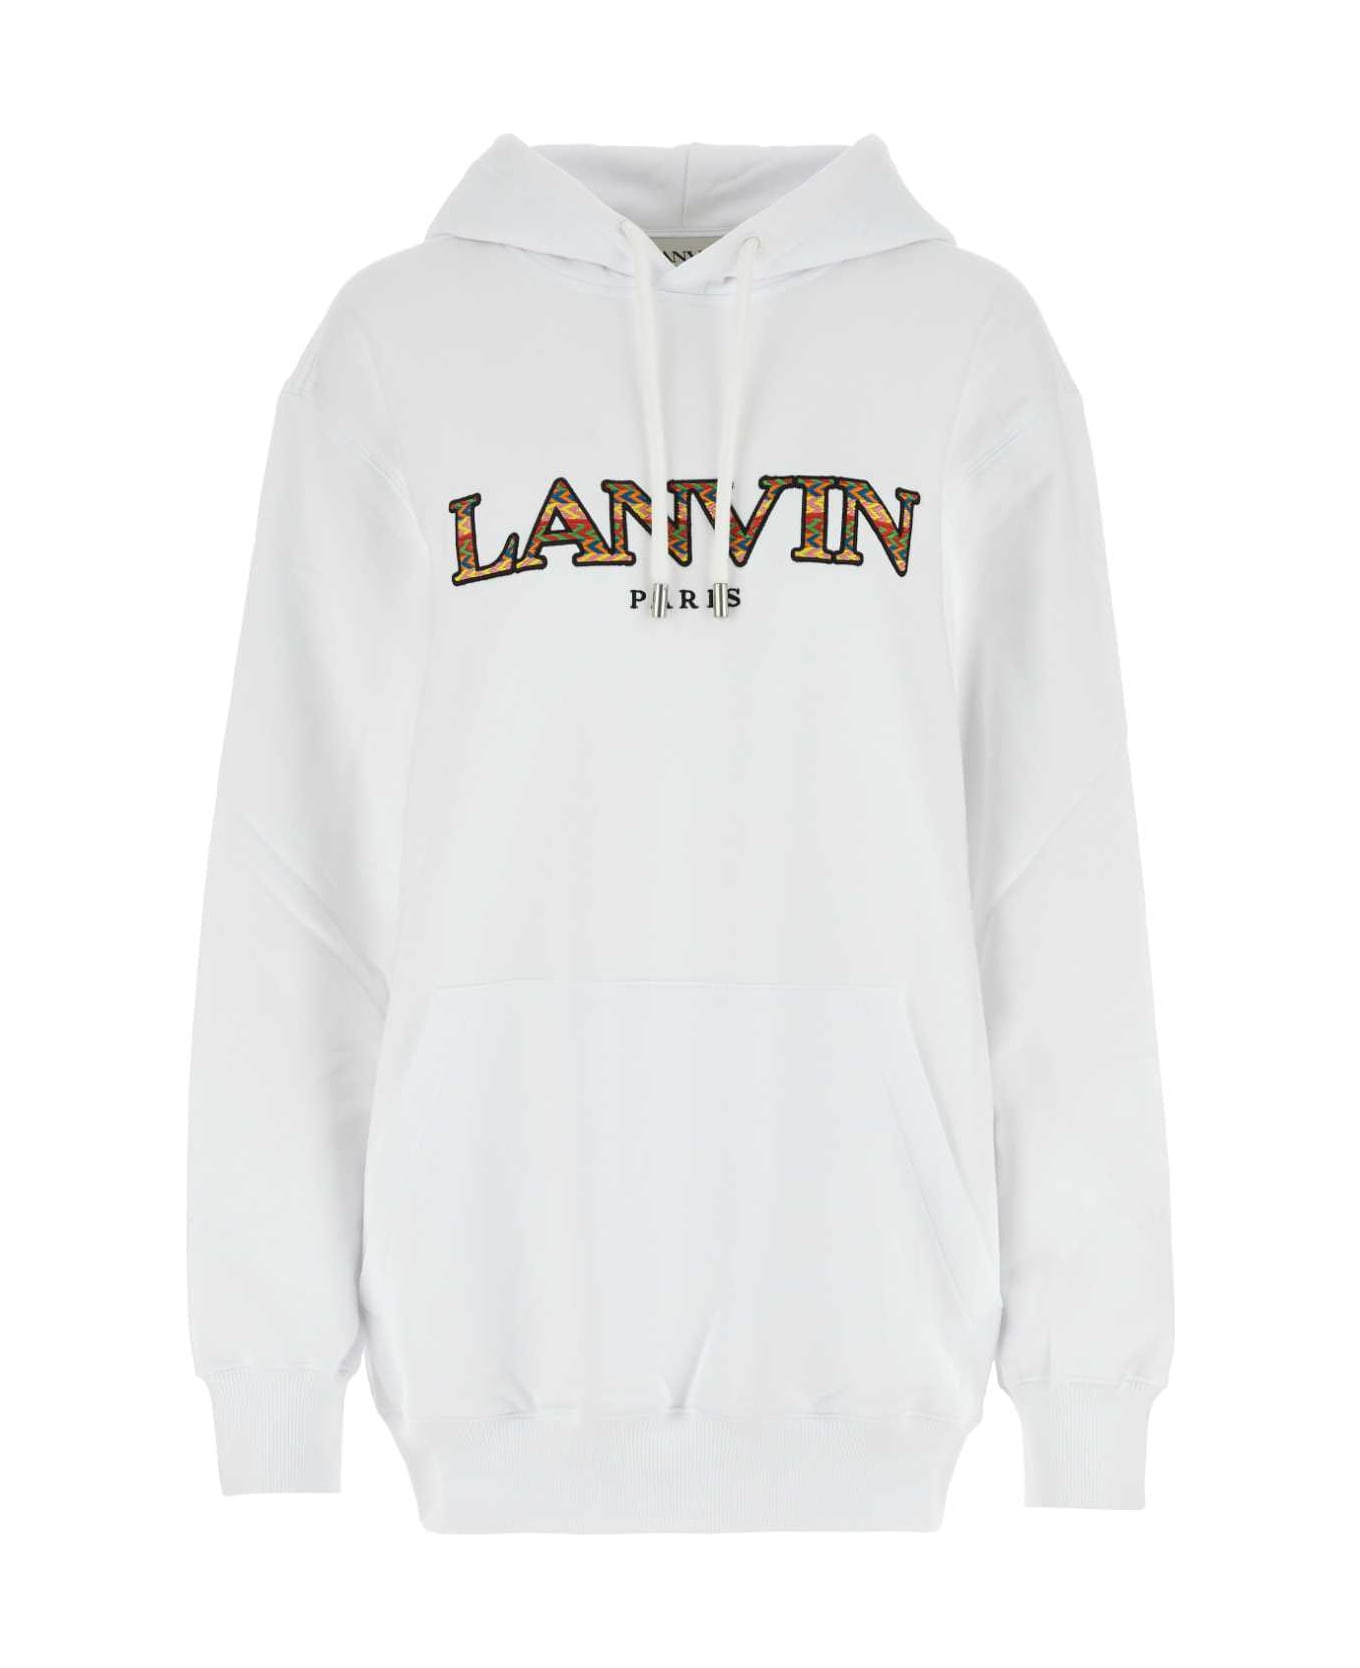 Lanvin White Cotton Sweatshirt - OPTICWHITE